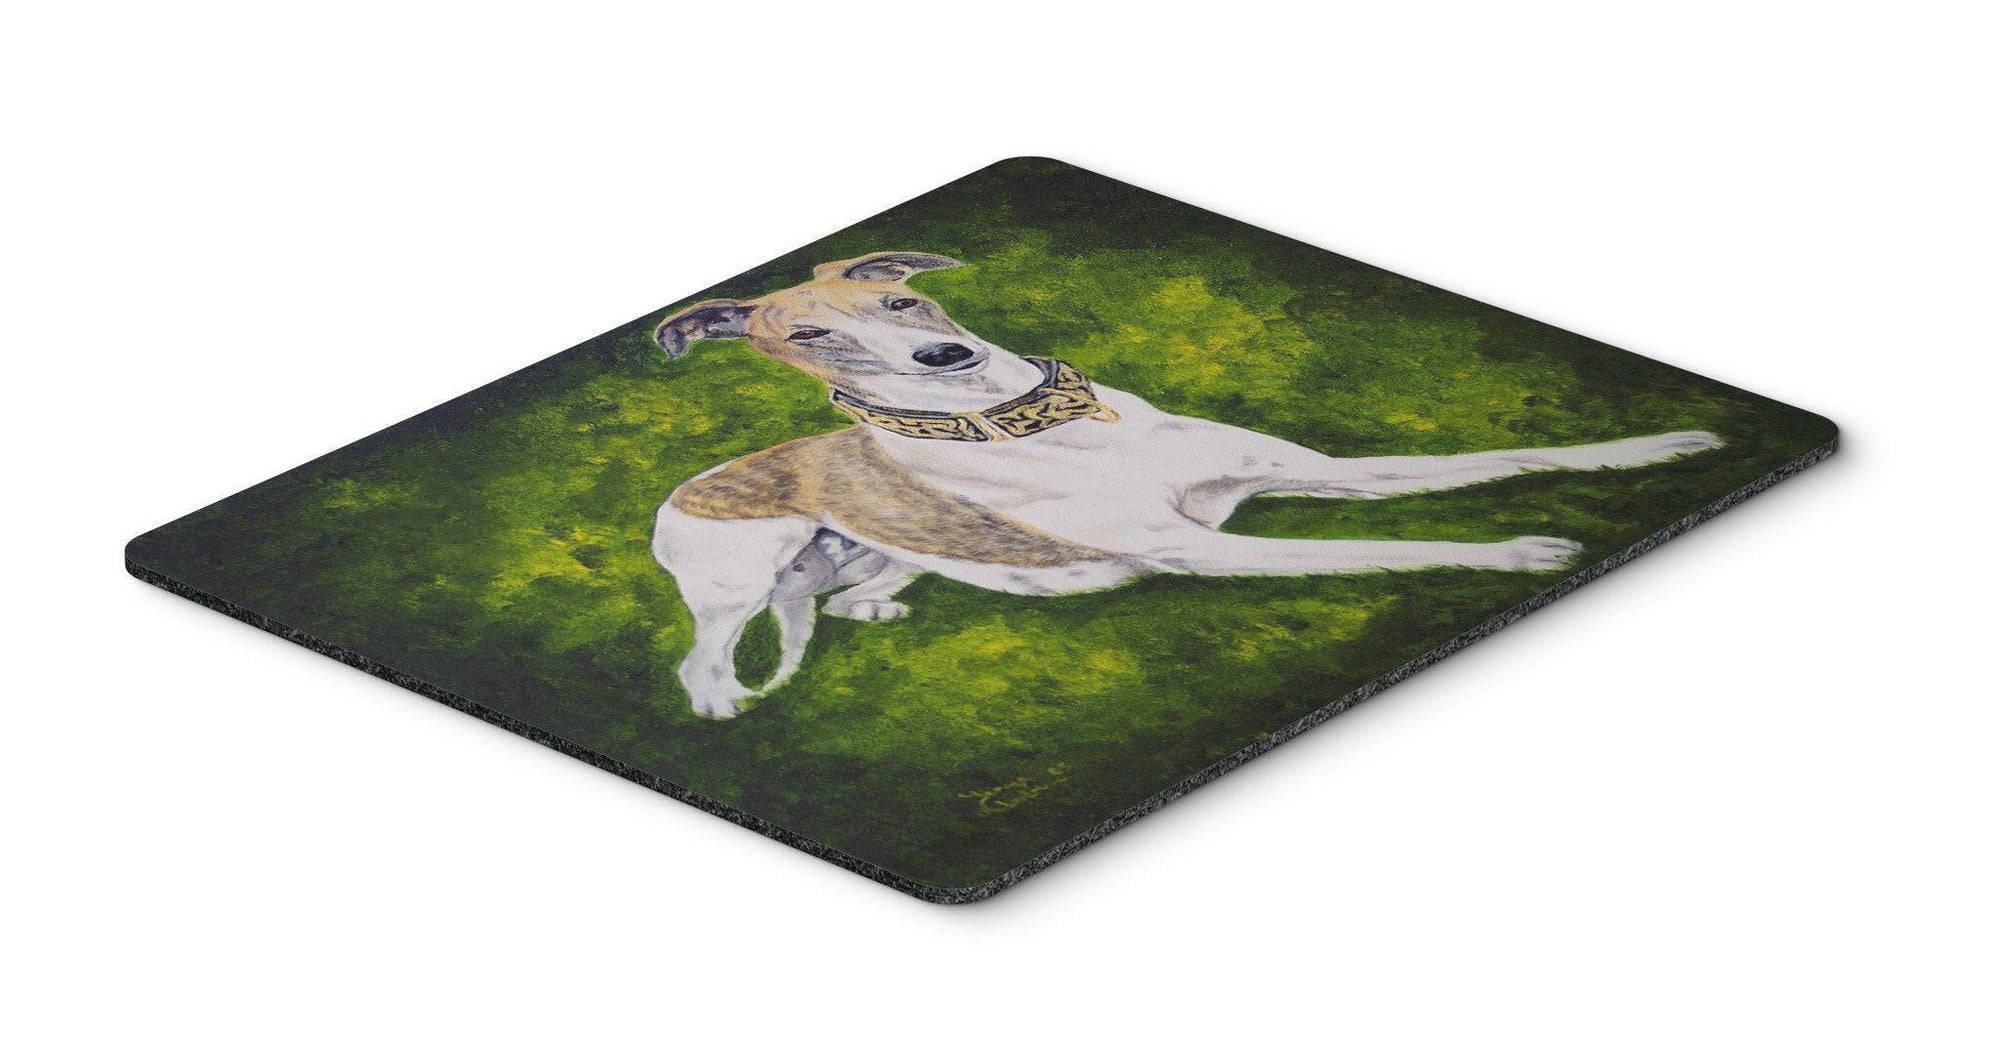 Isabella Greyhound Mouse Pad, Hot Pad or Trivet AMB1045MP by Caroline's Treasures